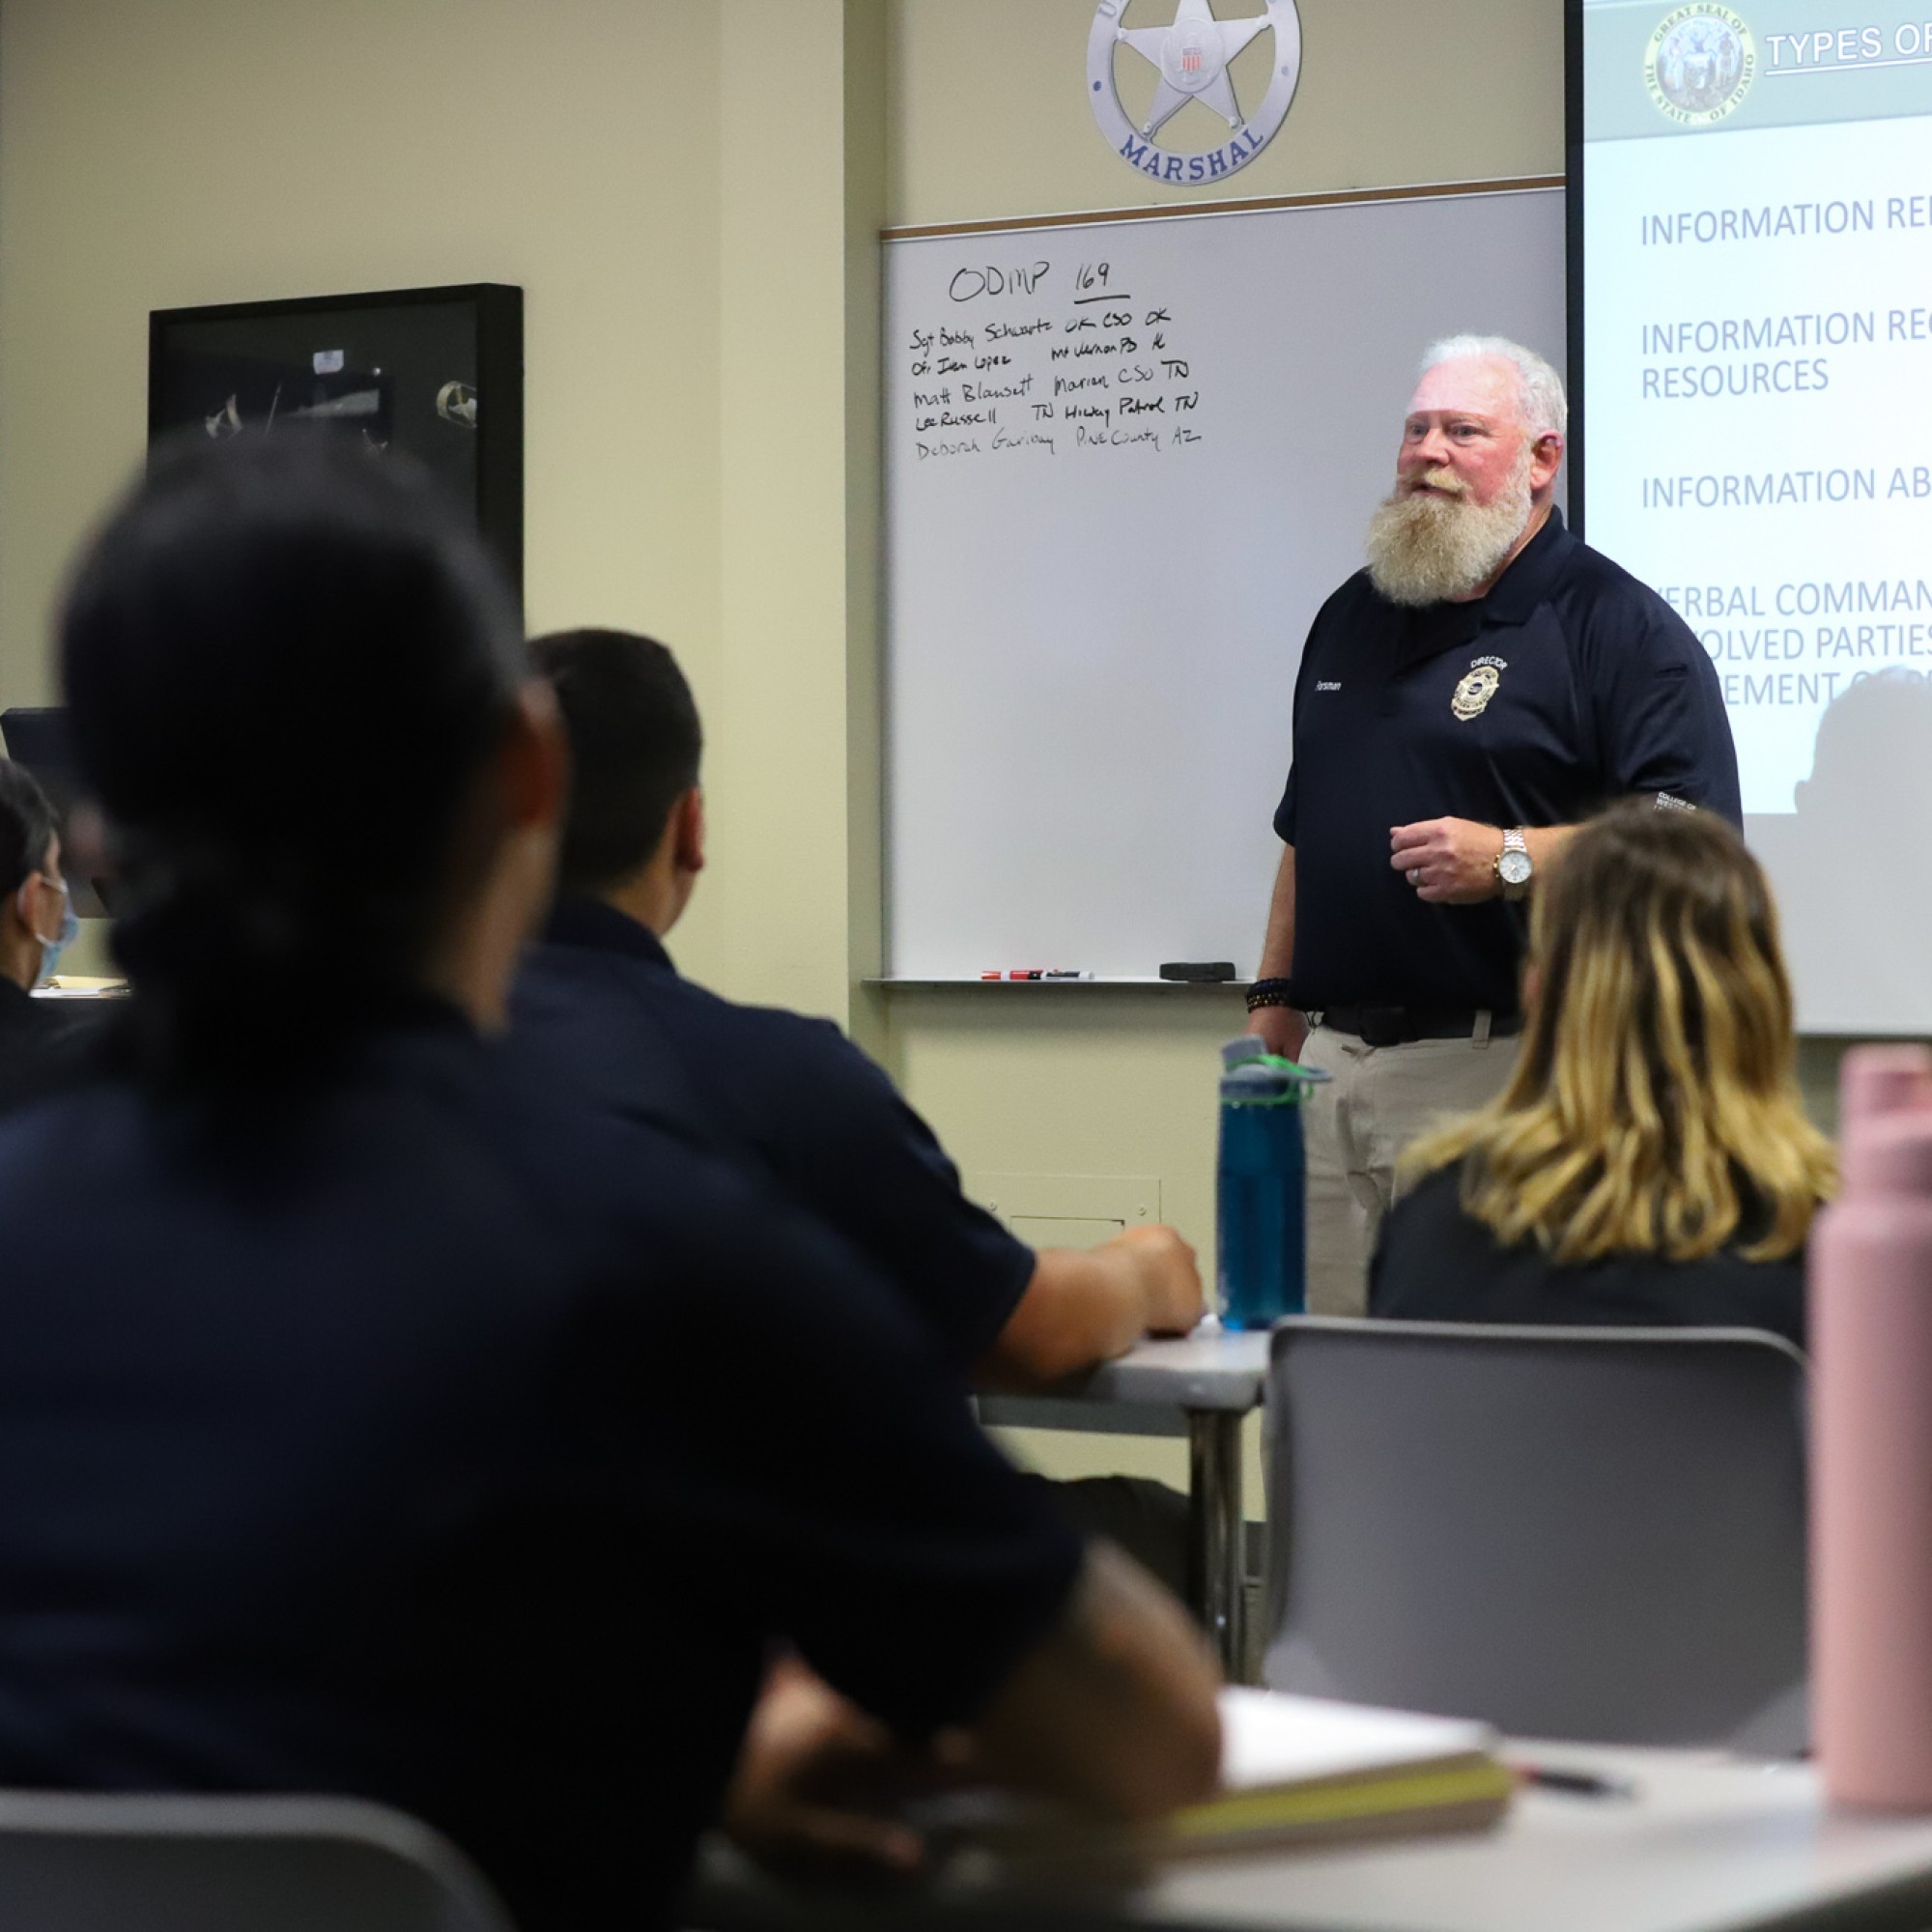 LeRoy Forsman teaching a Law Enforcement class at CWI